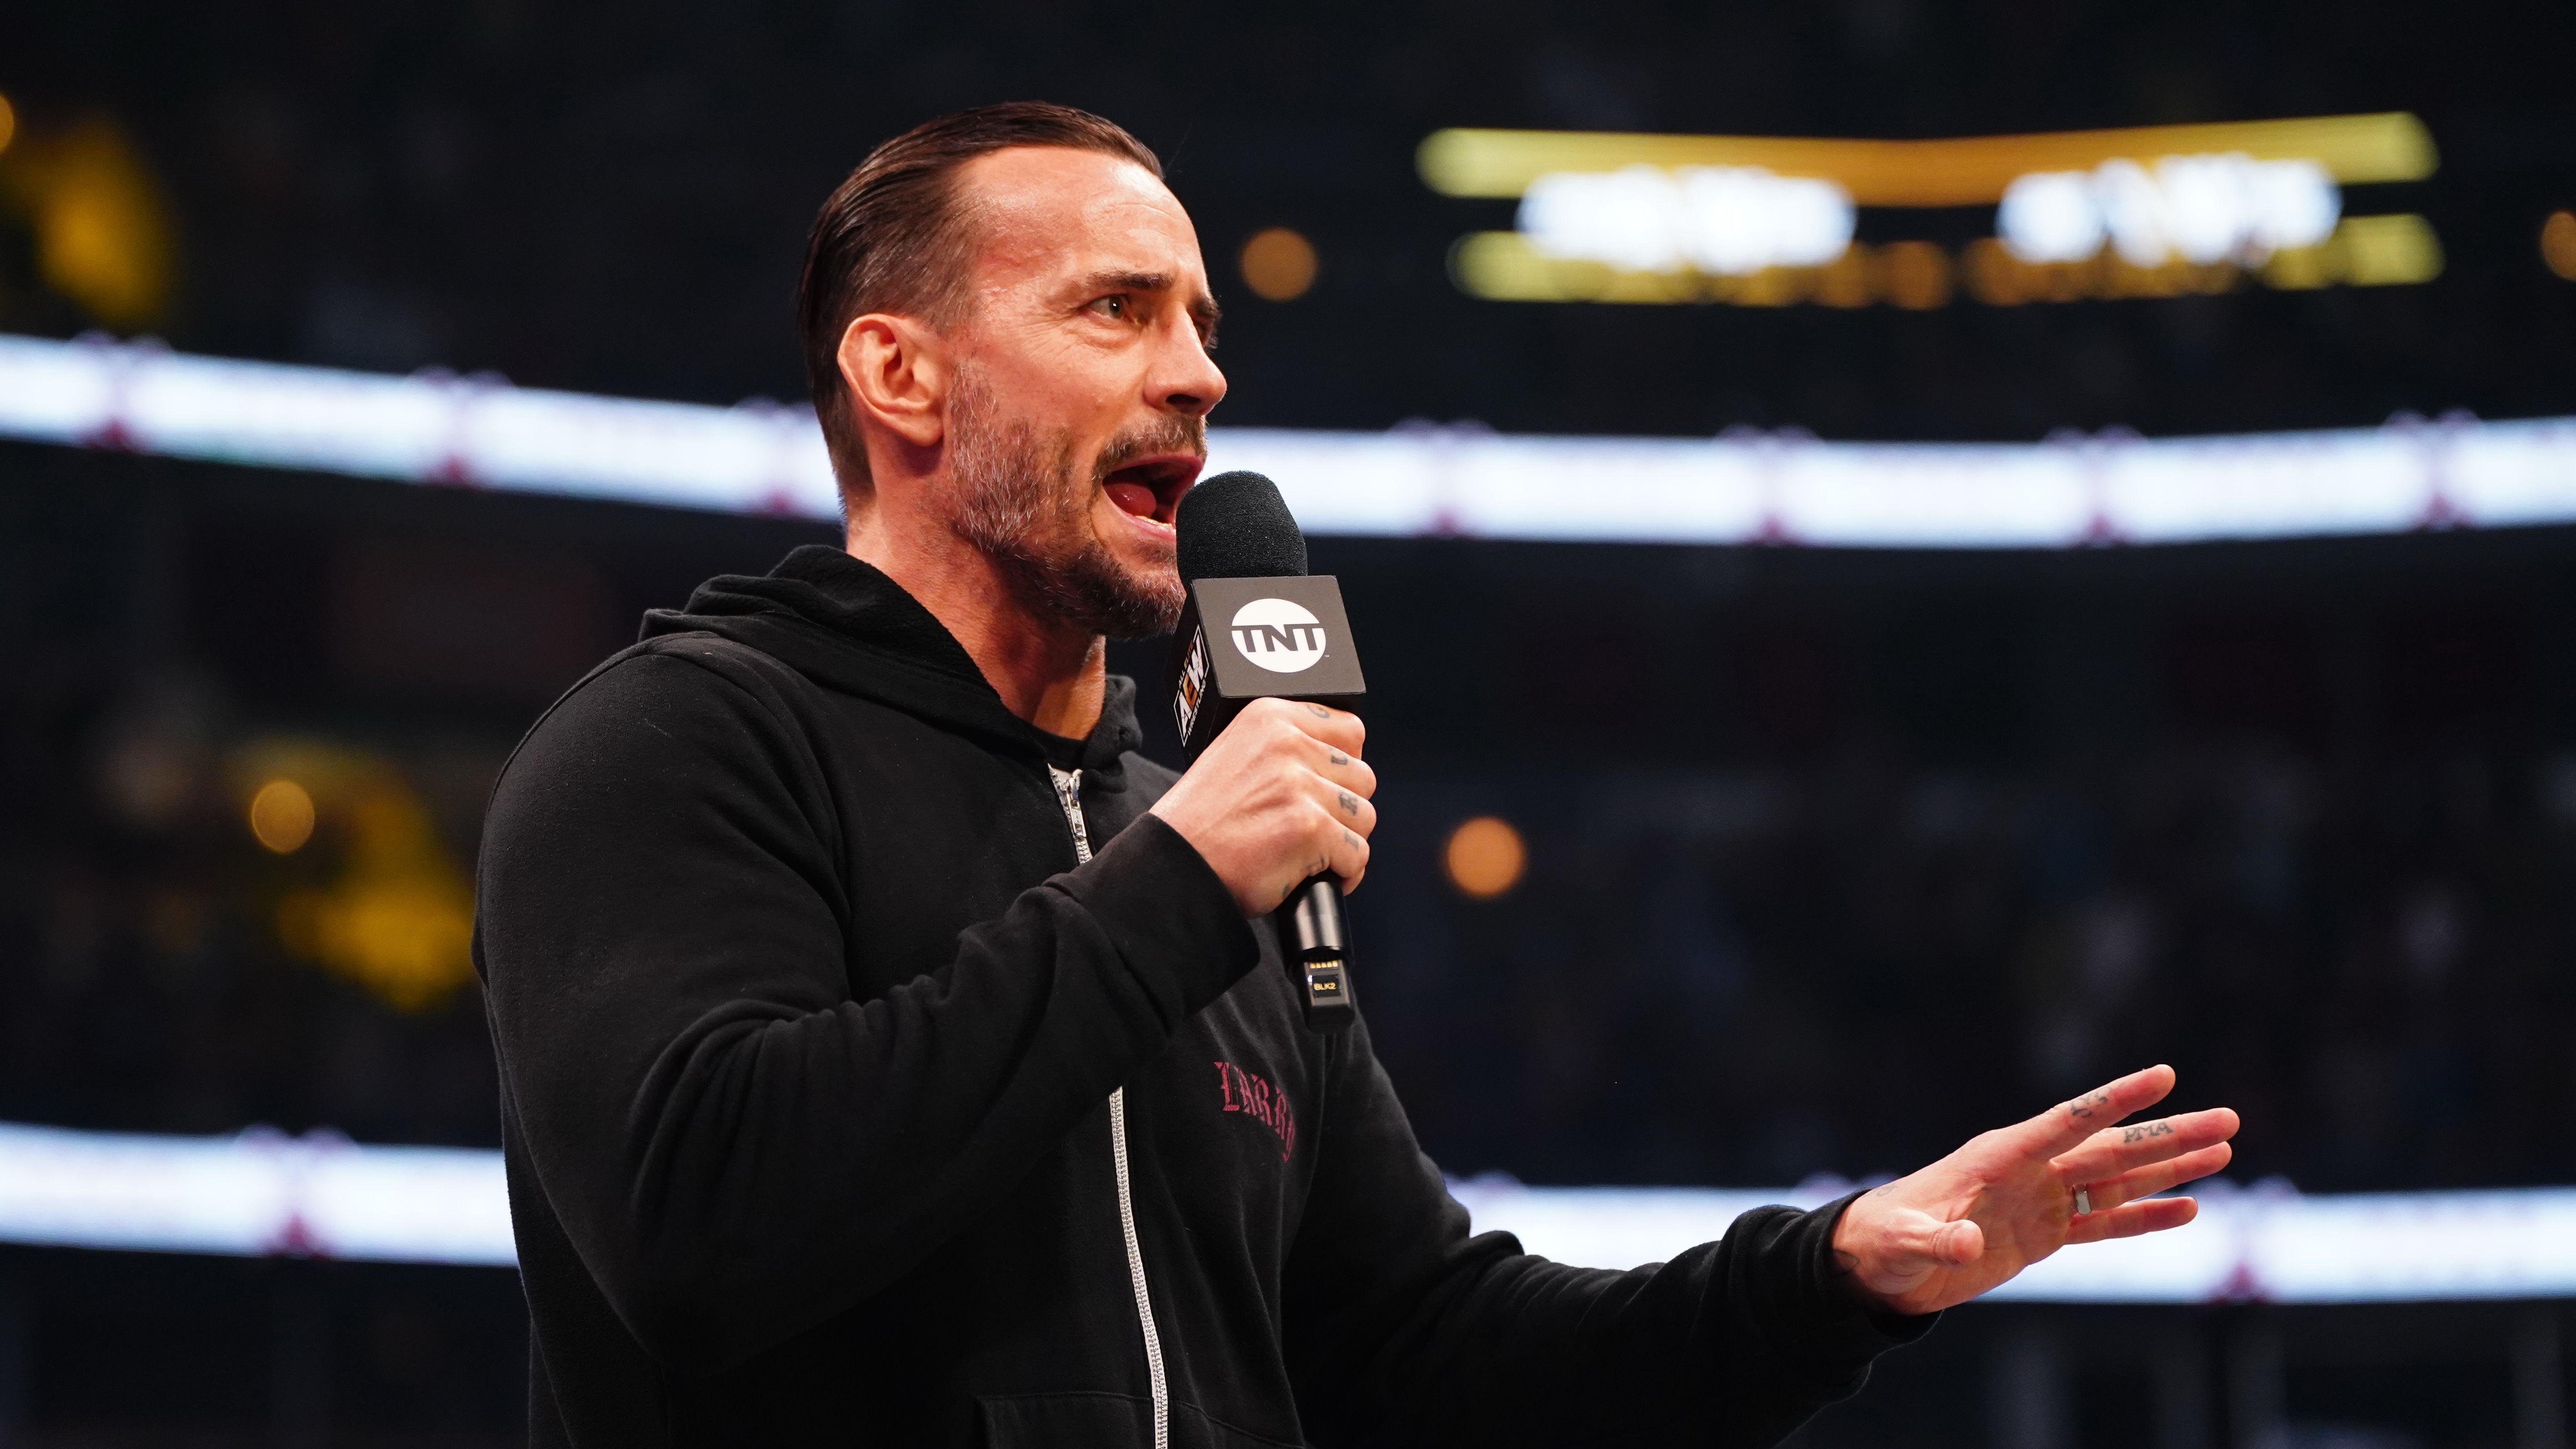 AEW's CM Punk says WWE returns follow the same boring formula